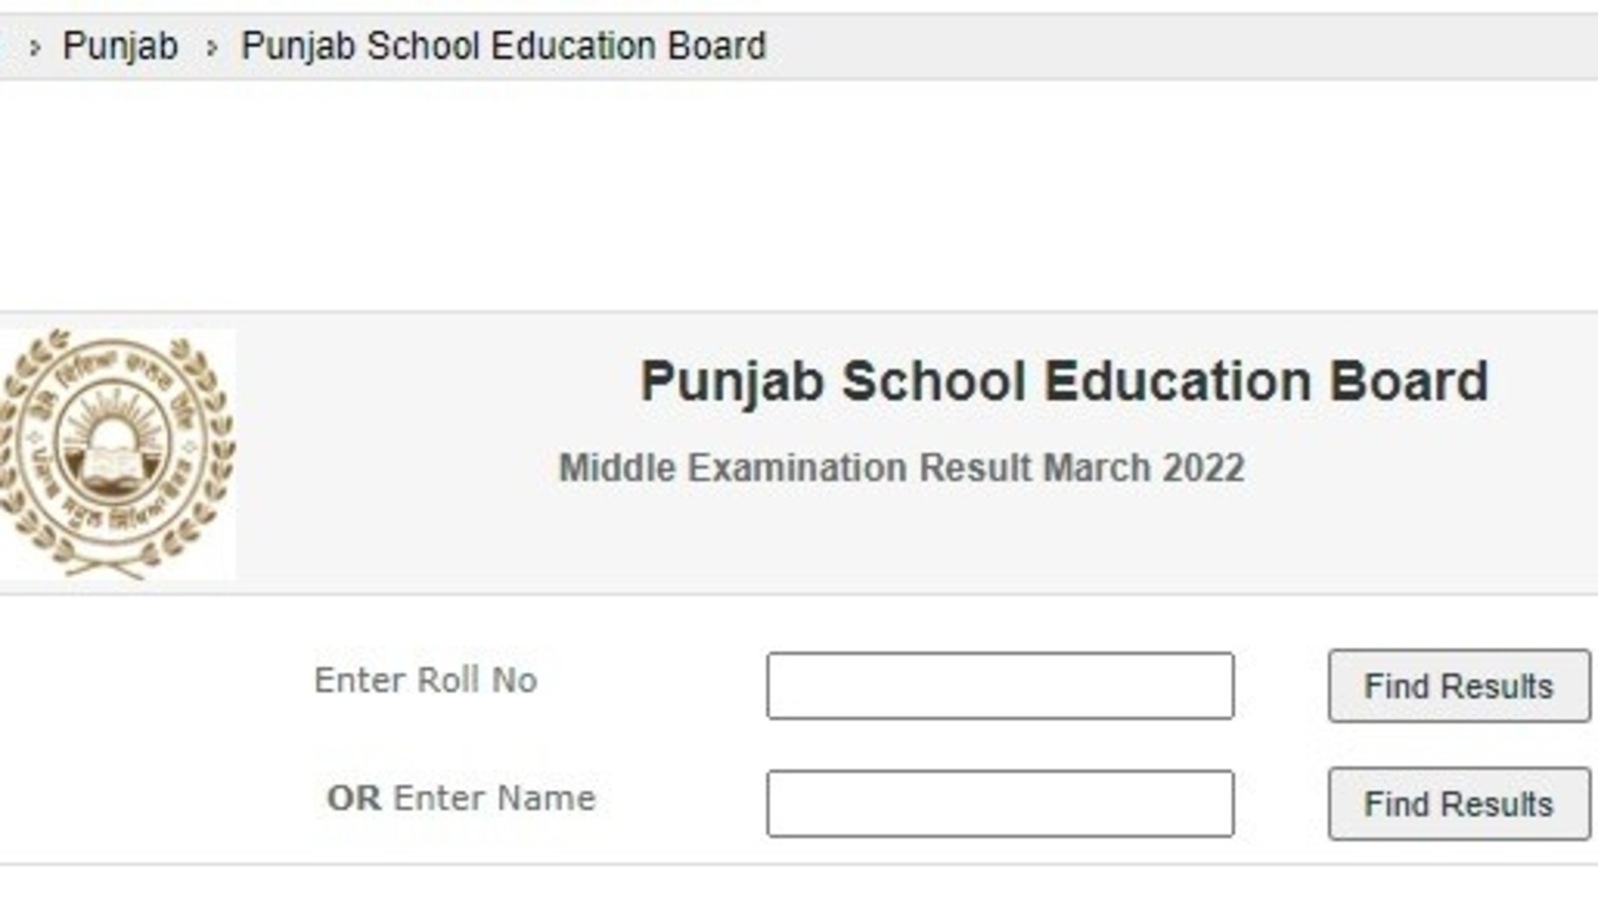 PSEB: Punjab School Education Board Results And Study Materials